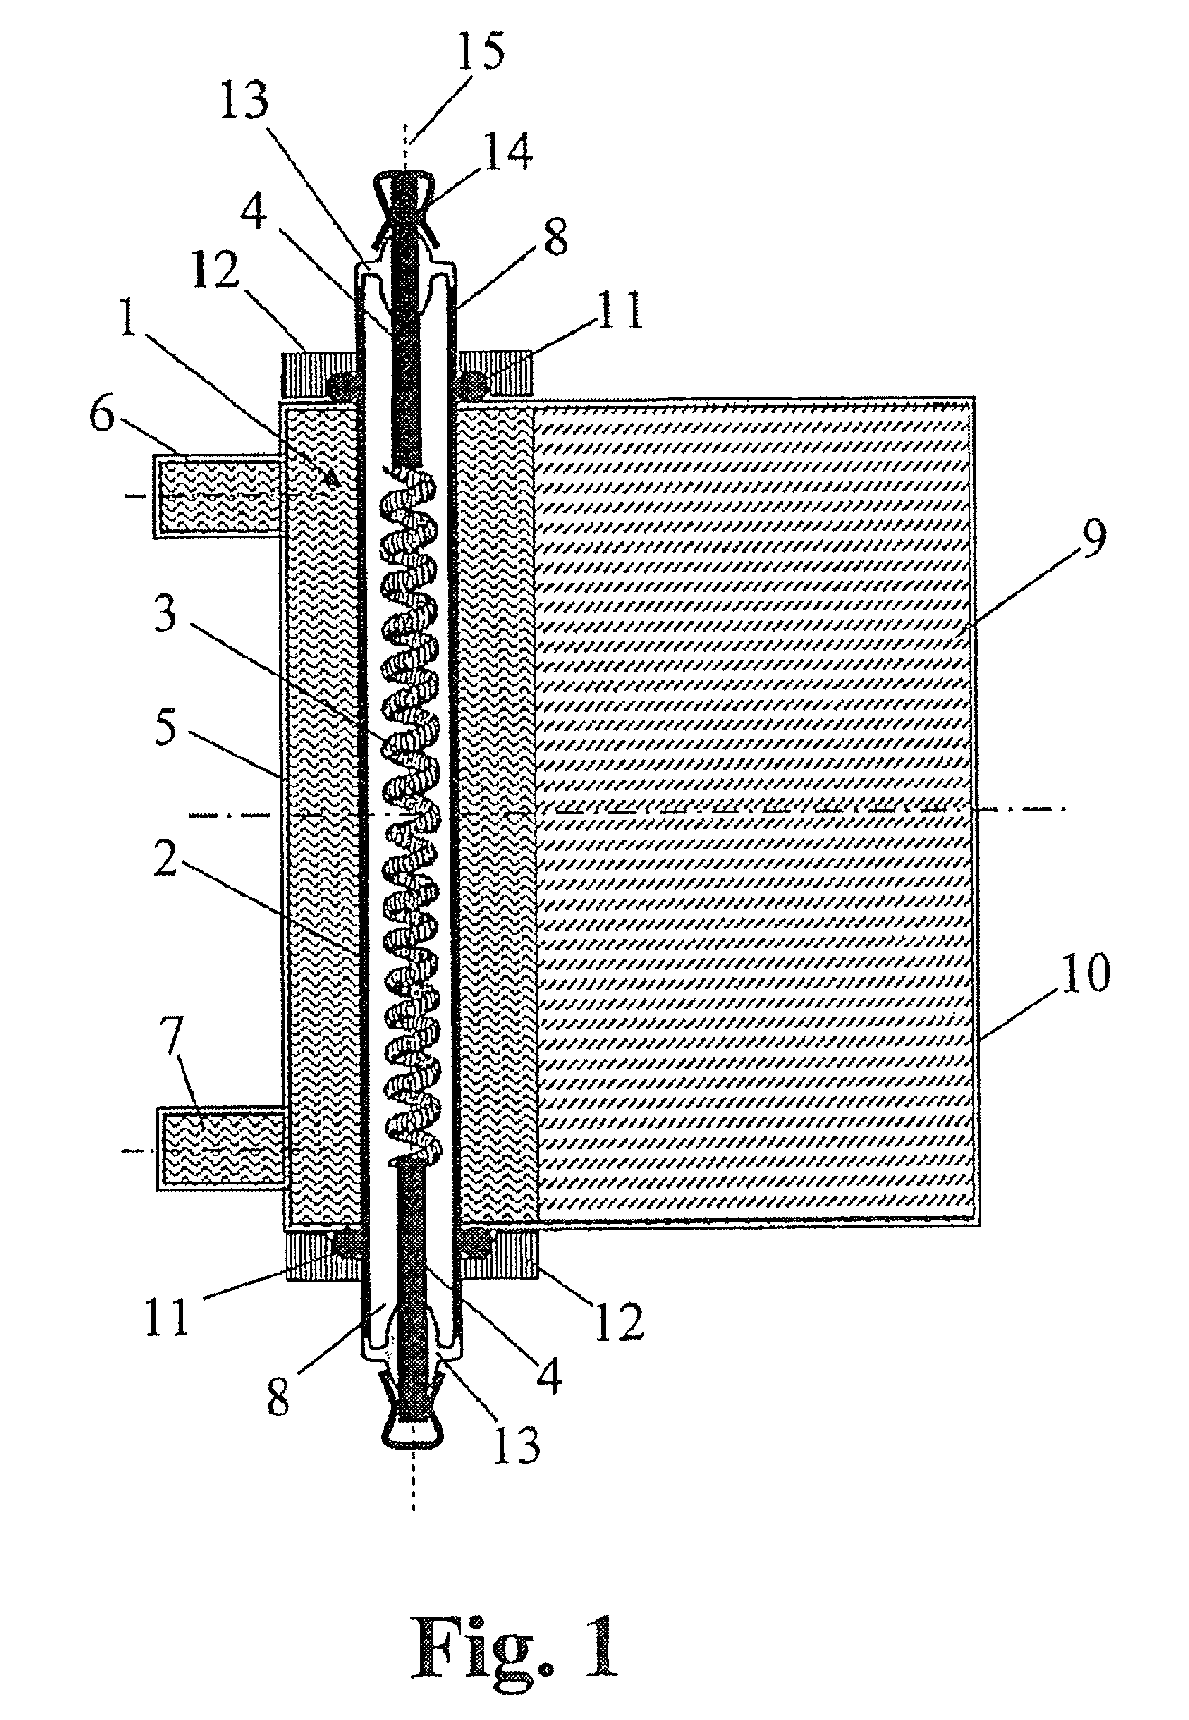 Irradiation device having transition glass seal